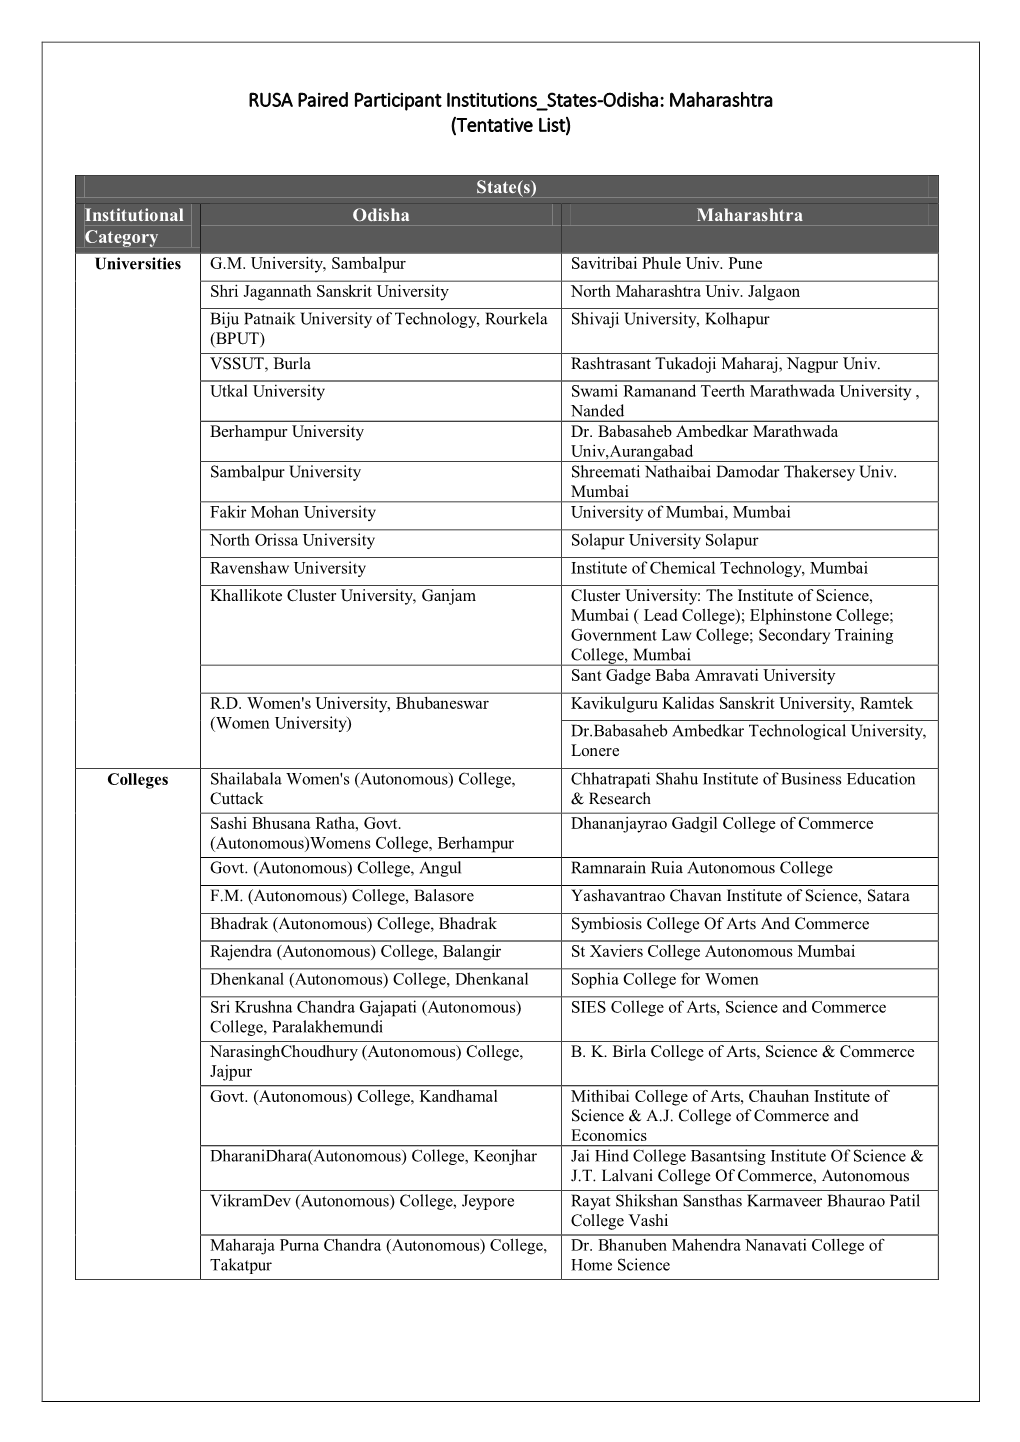 RUSA Paired Participant Institutions States-Odisha: Maharashtra (Tentative List)